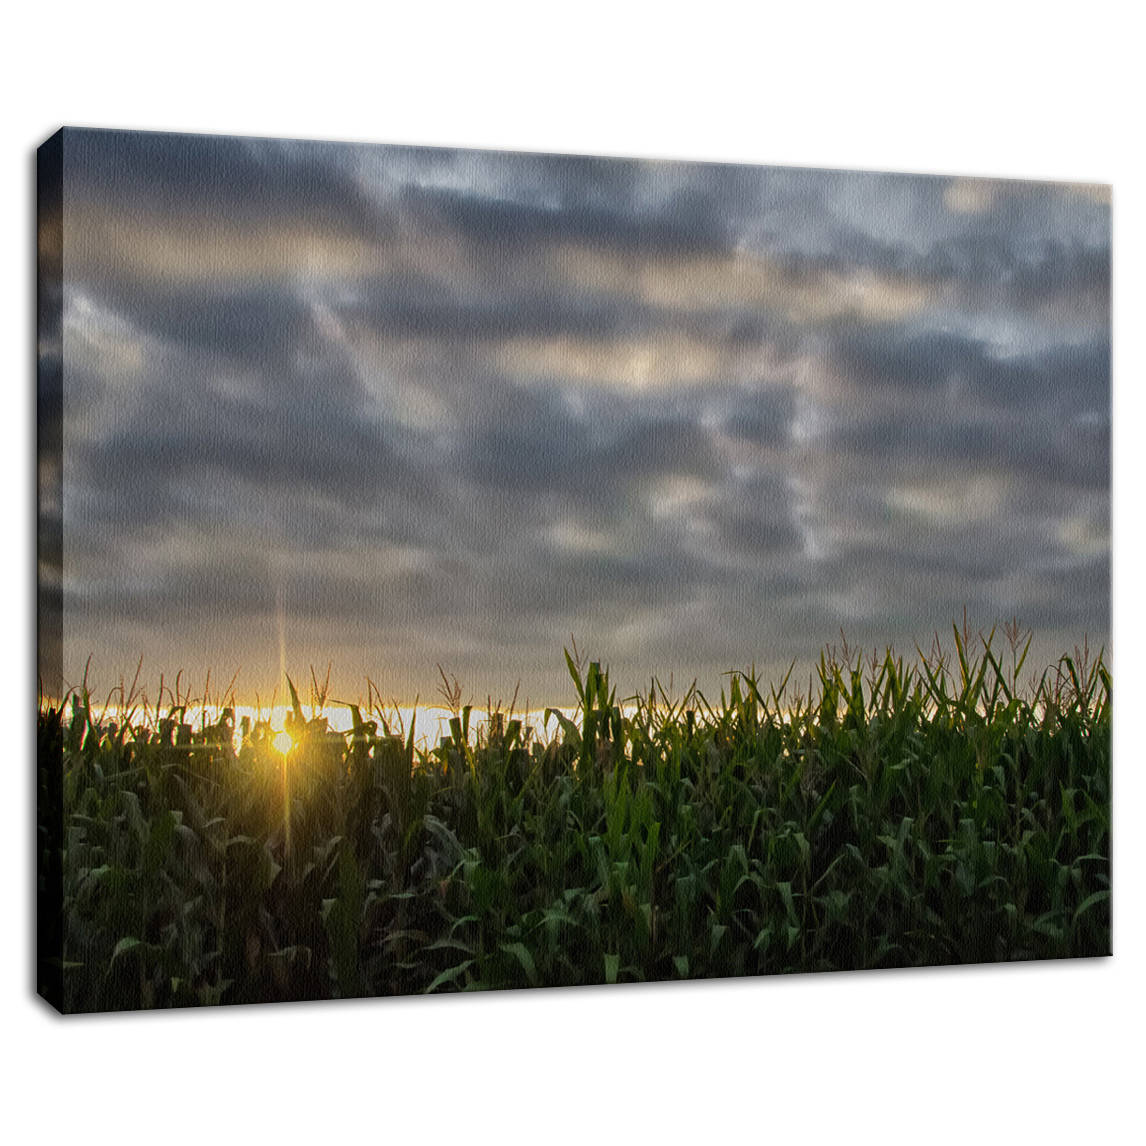 Rows of Corn Rural Landscape Photograph Fine Art Canvas Wall Art Prints  - PIPAFINEART